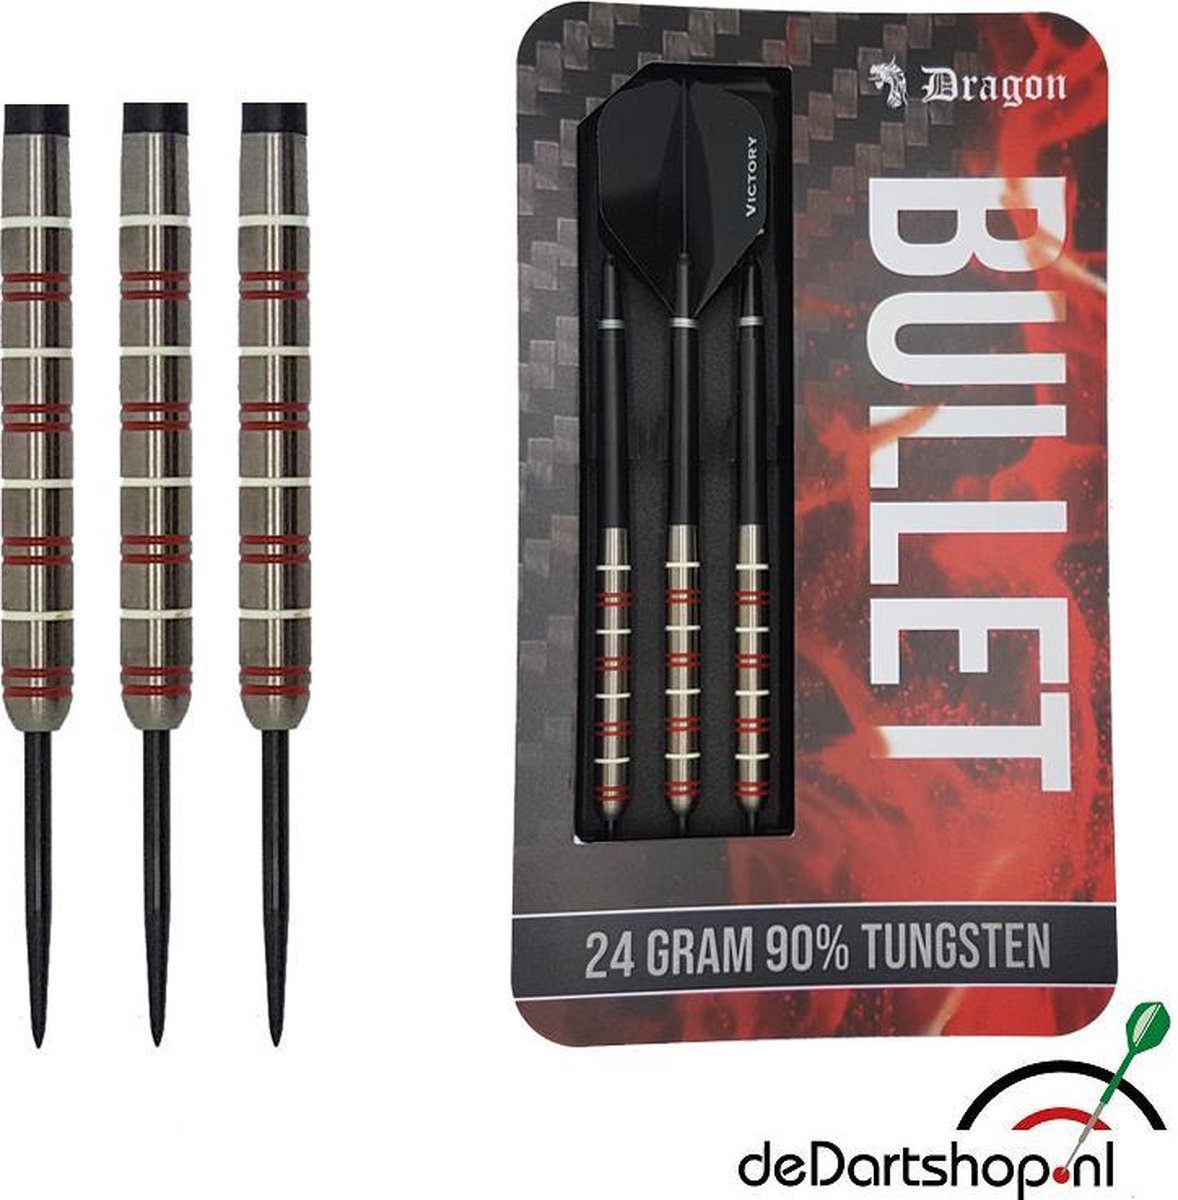 Dragon darts - Bullet - 90% tungsten - 24 gram - dartpijlen